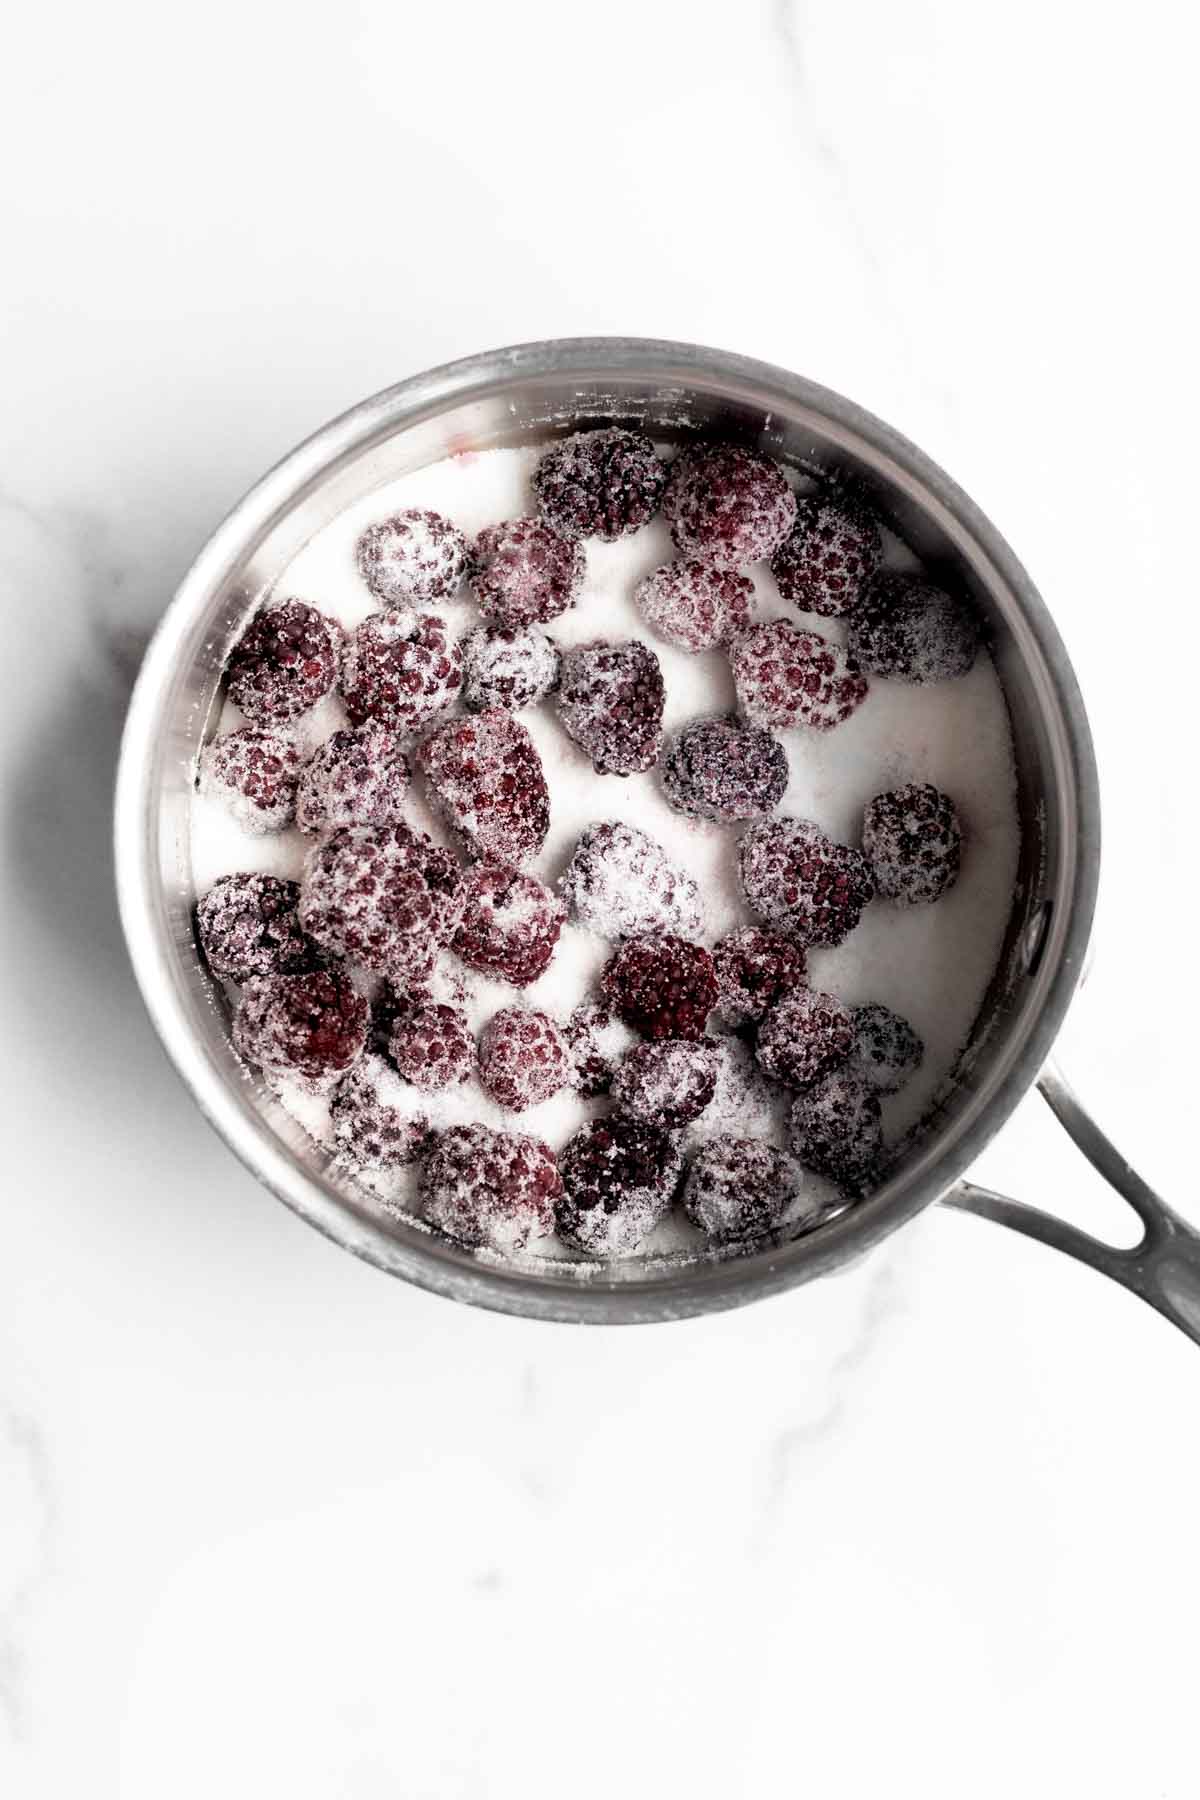 Frozen blackberries and granulated sugar in a saucepan.